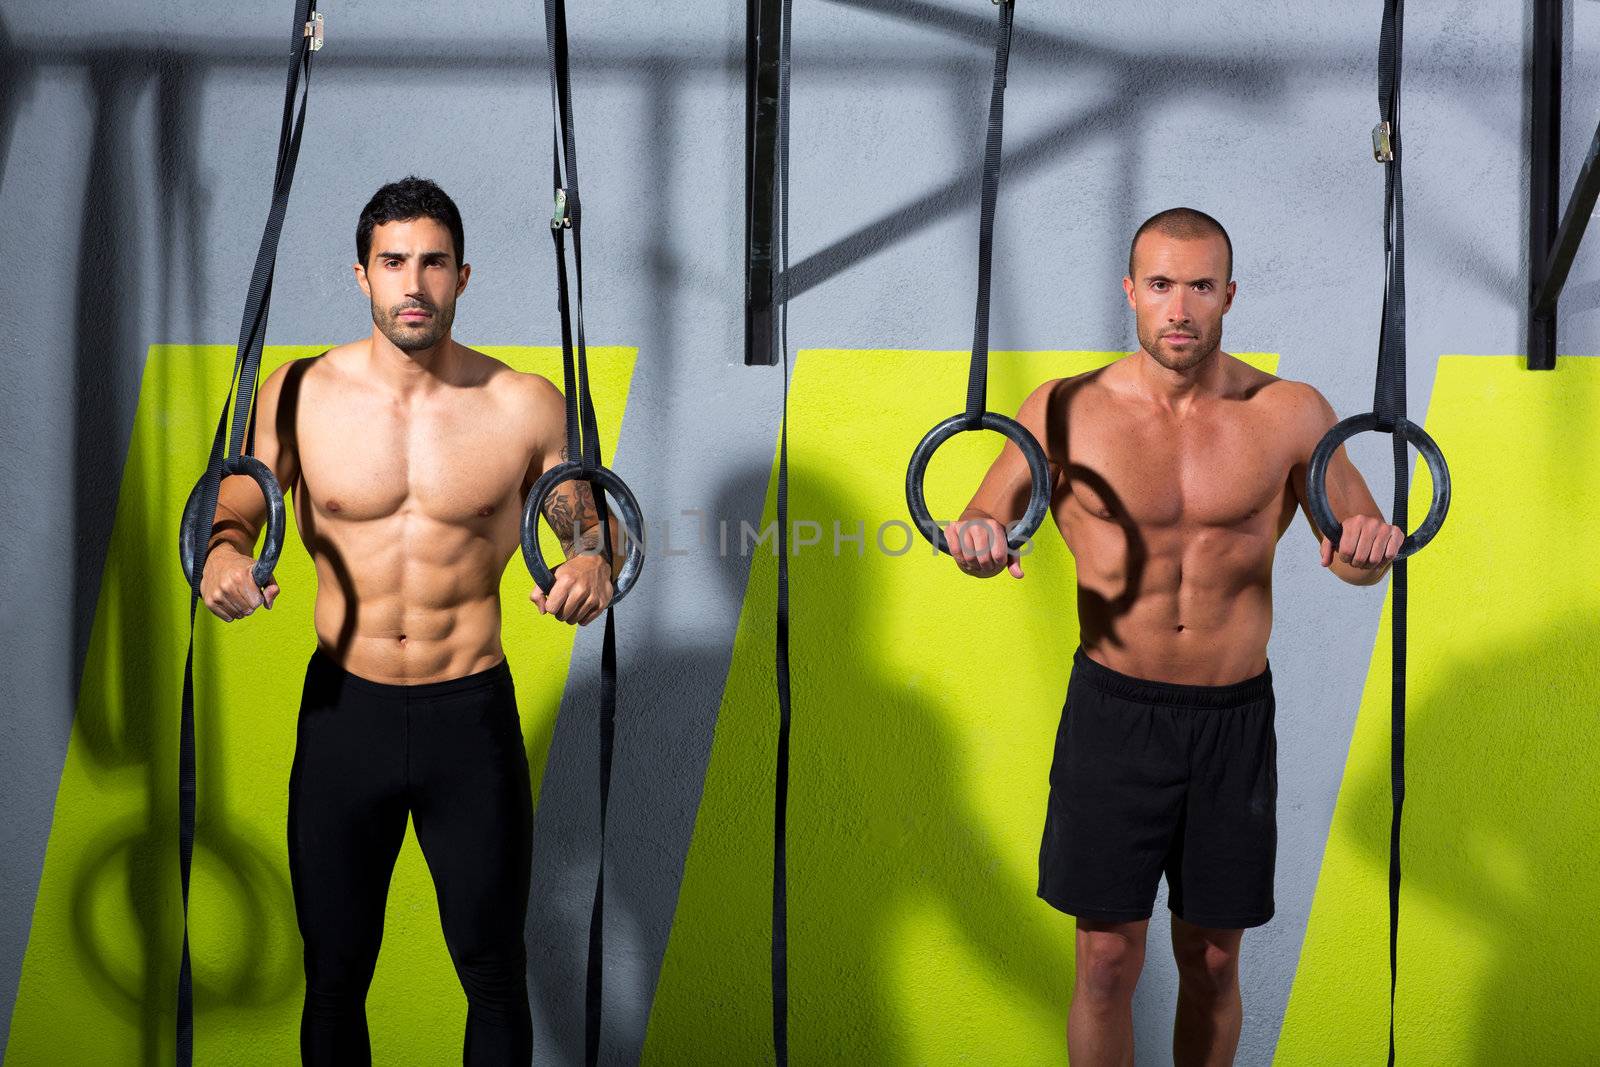 Crossfit dip ring two men workout at gym dipping exercise